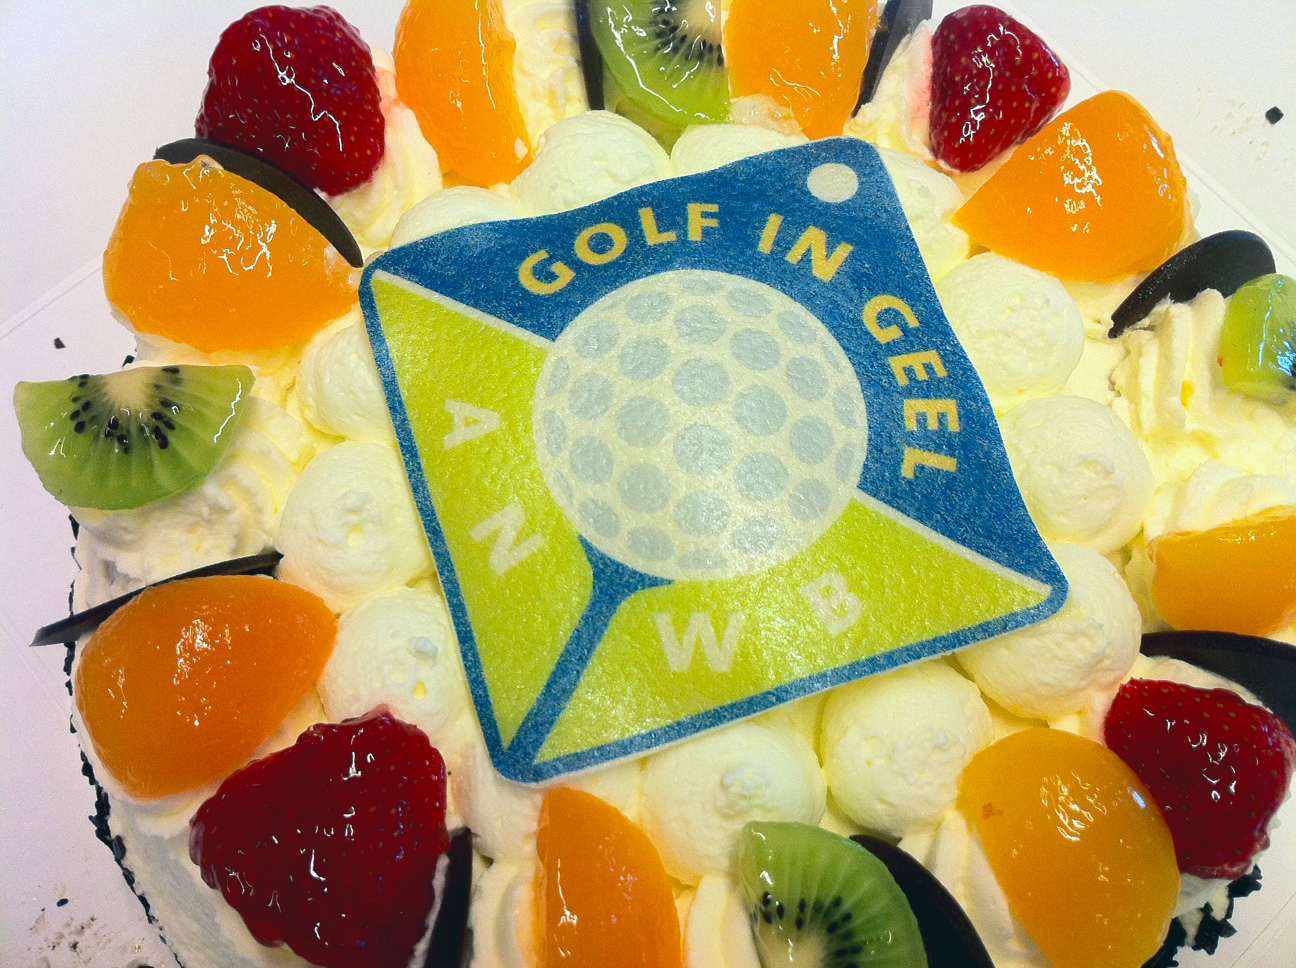 anwb-golf-logo-taart